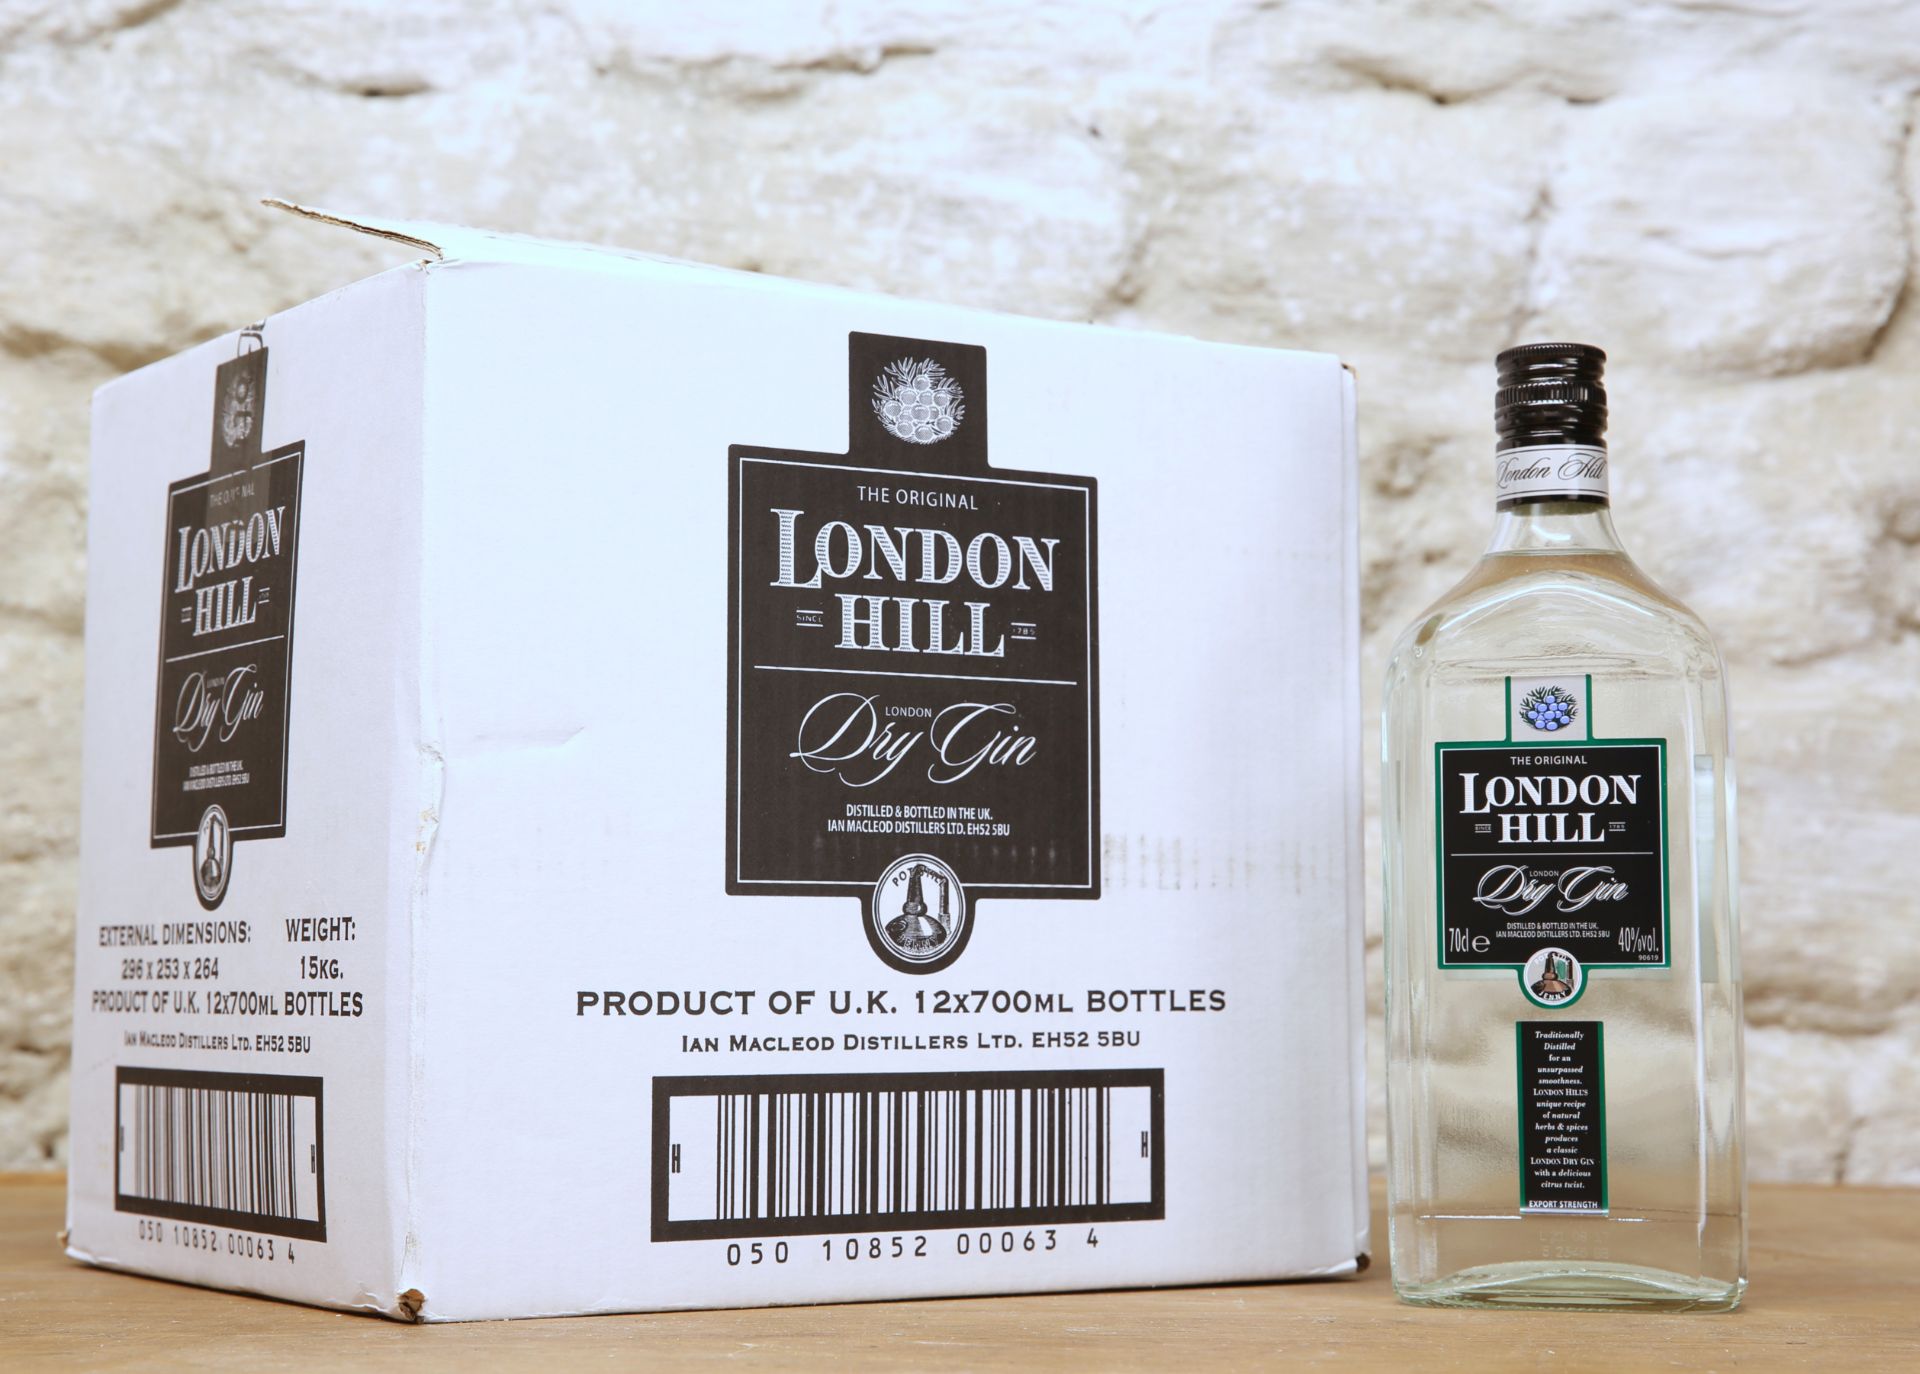 12 BOTTLES CASE 'THE ORIGINAL' LONDON HILL LONDON DRY GIN